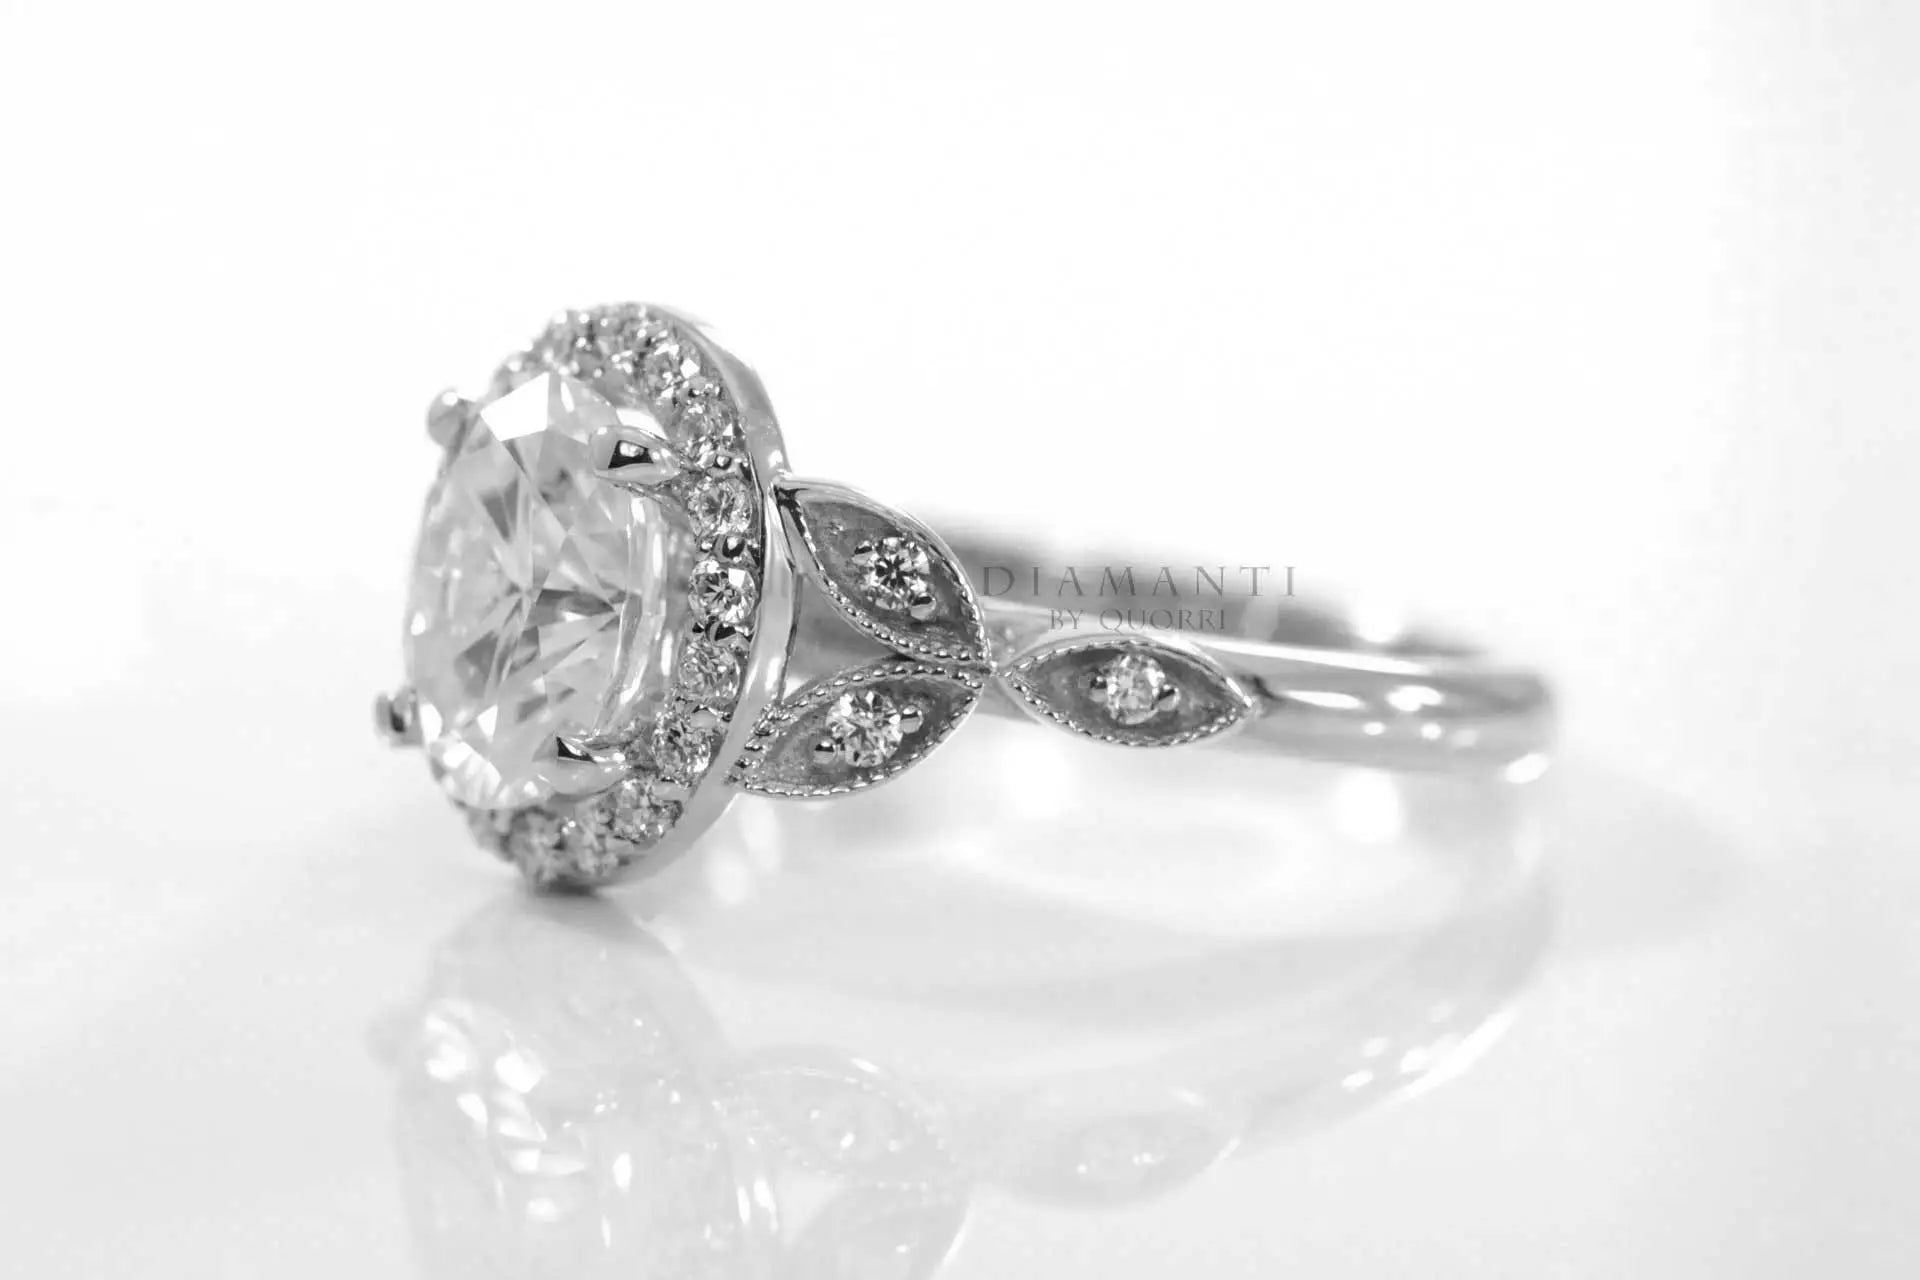 vintage 14k rose gold 2ct oval lab diamond engagement ring Quorri